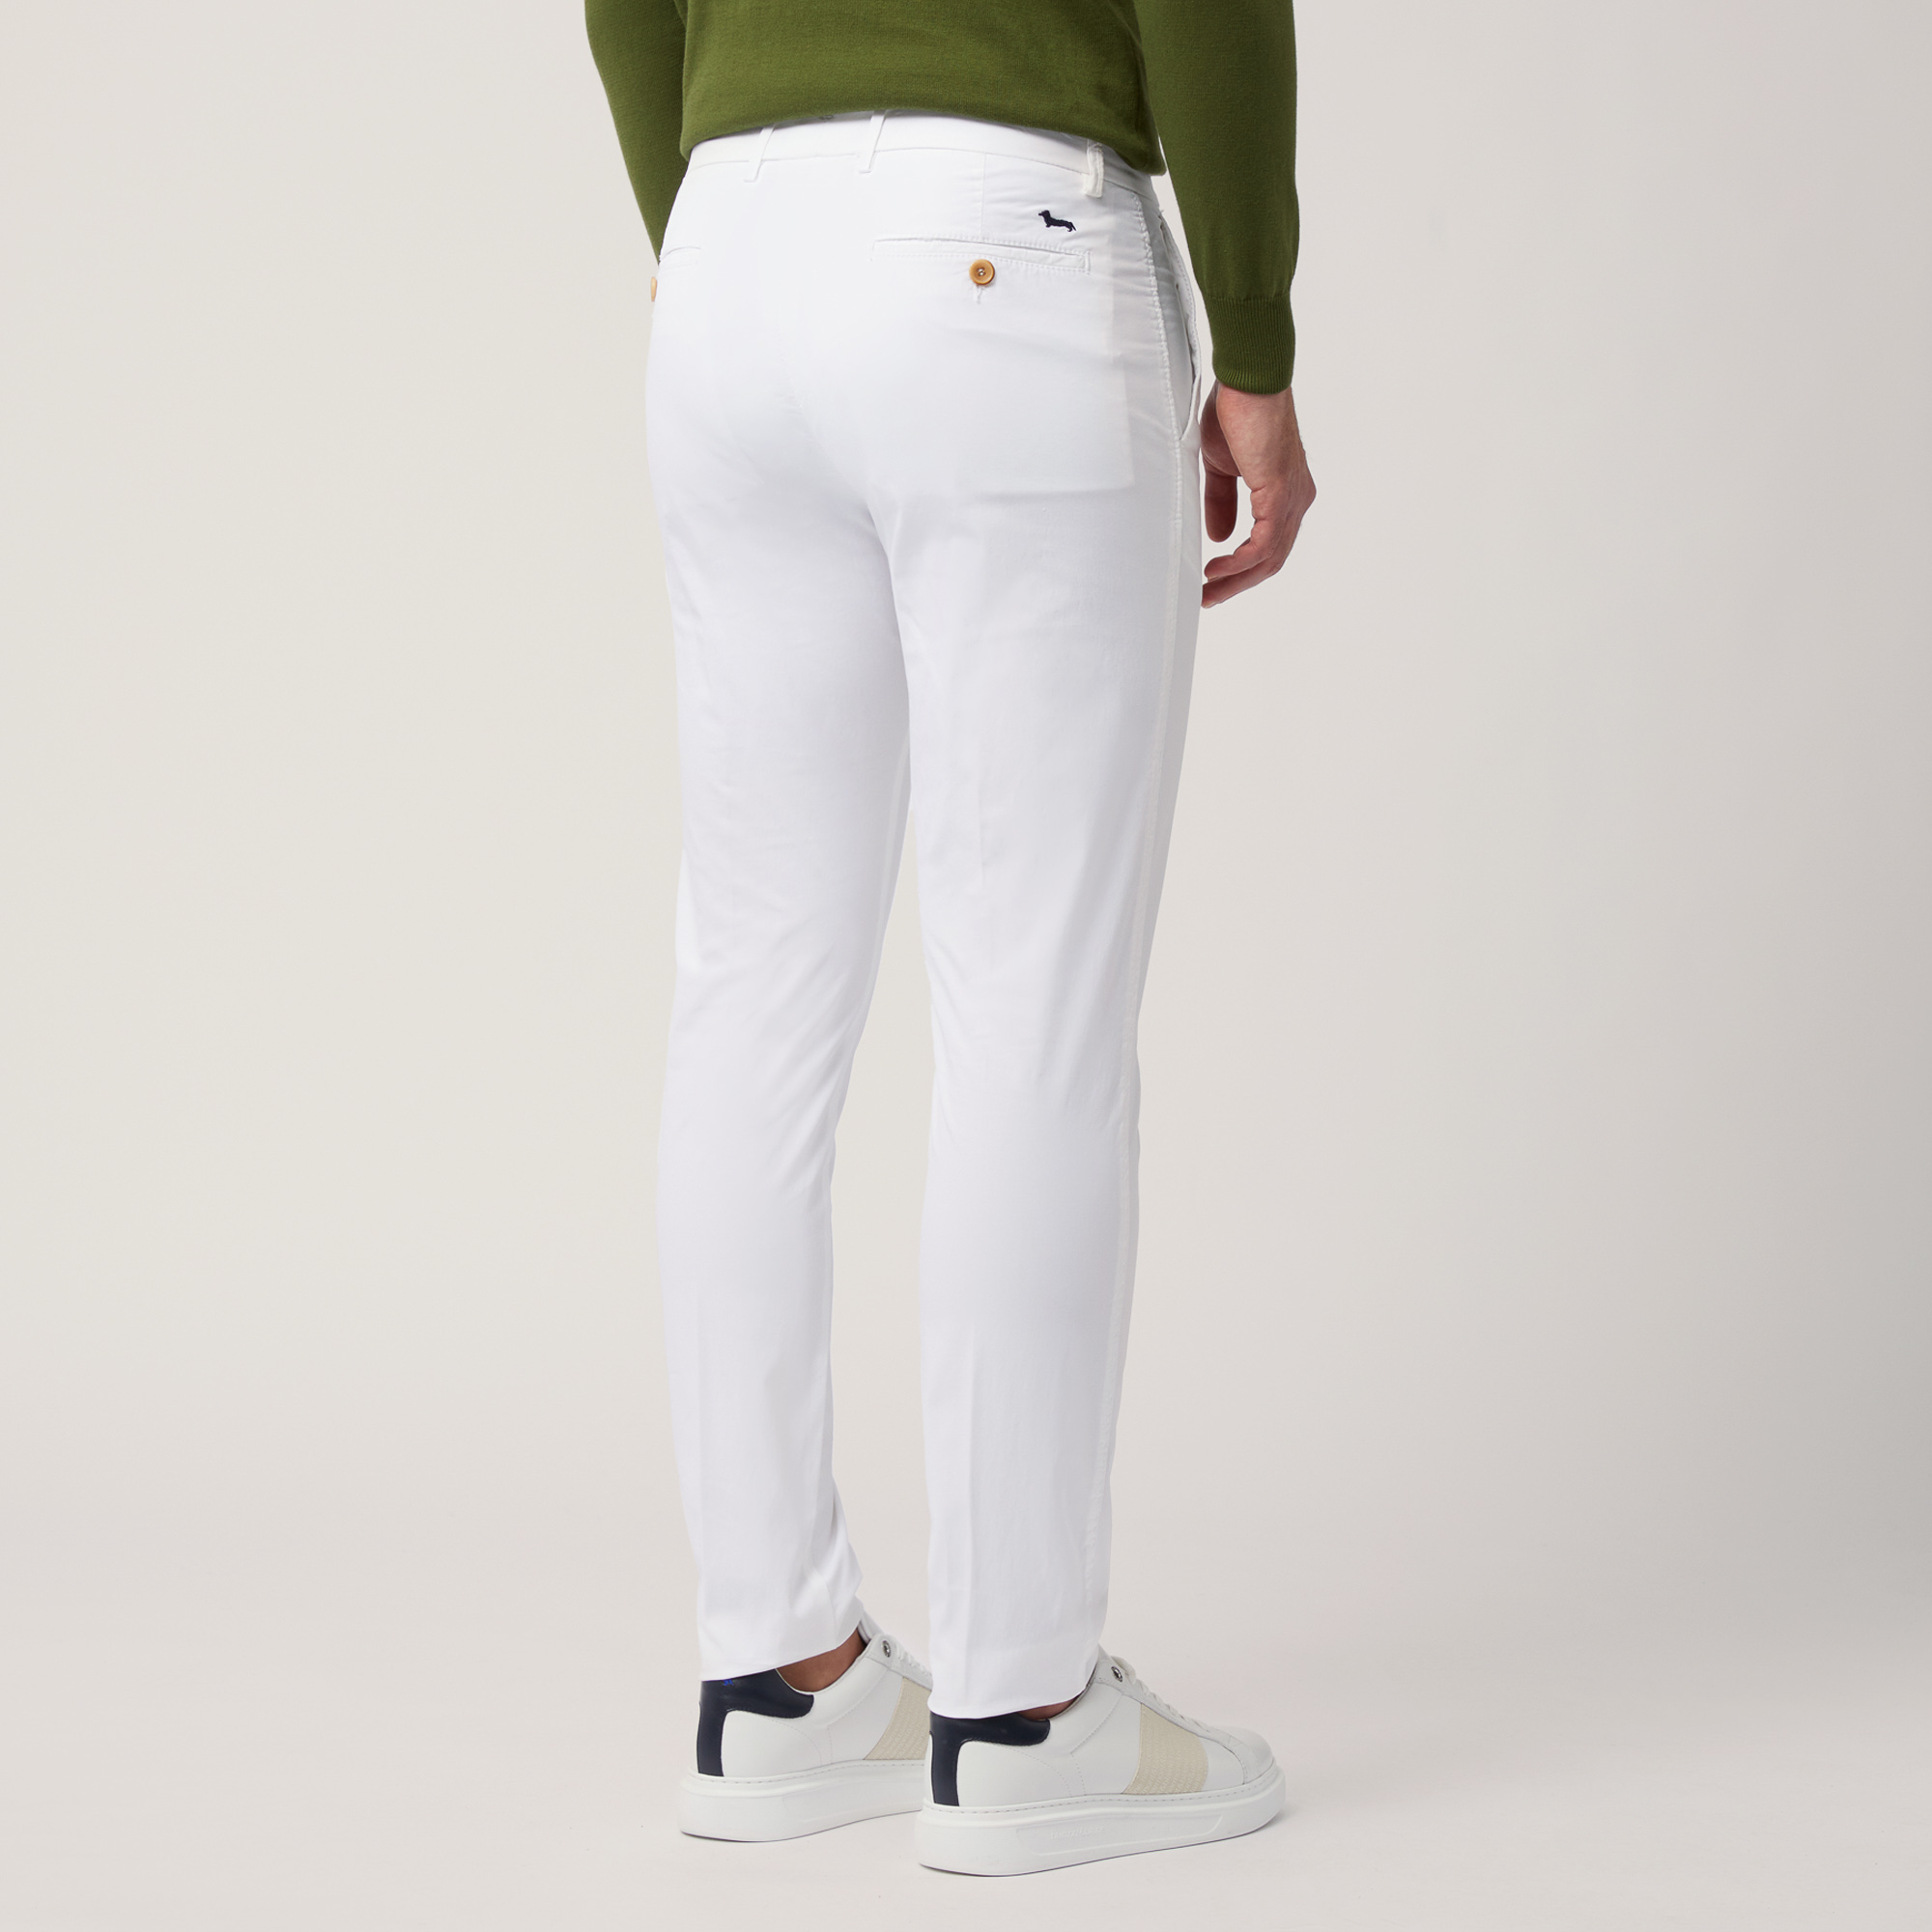 Pantaloni Chino Narrow Fit, Bianco, large image number 1